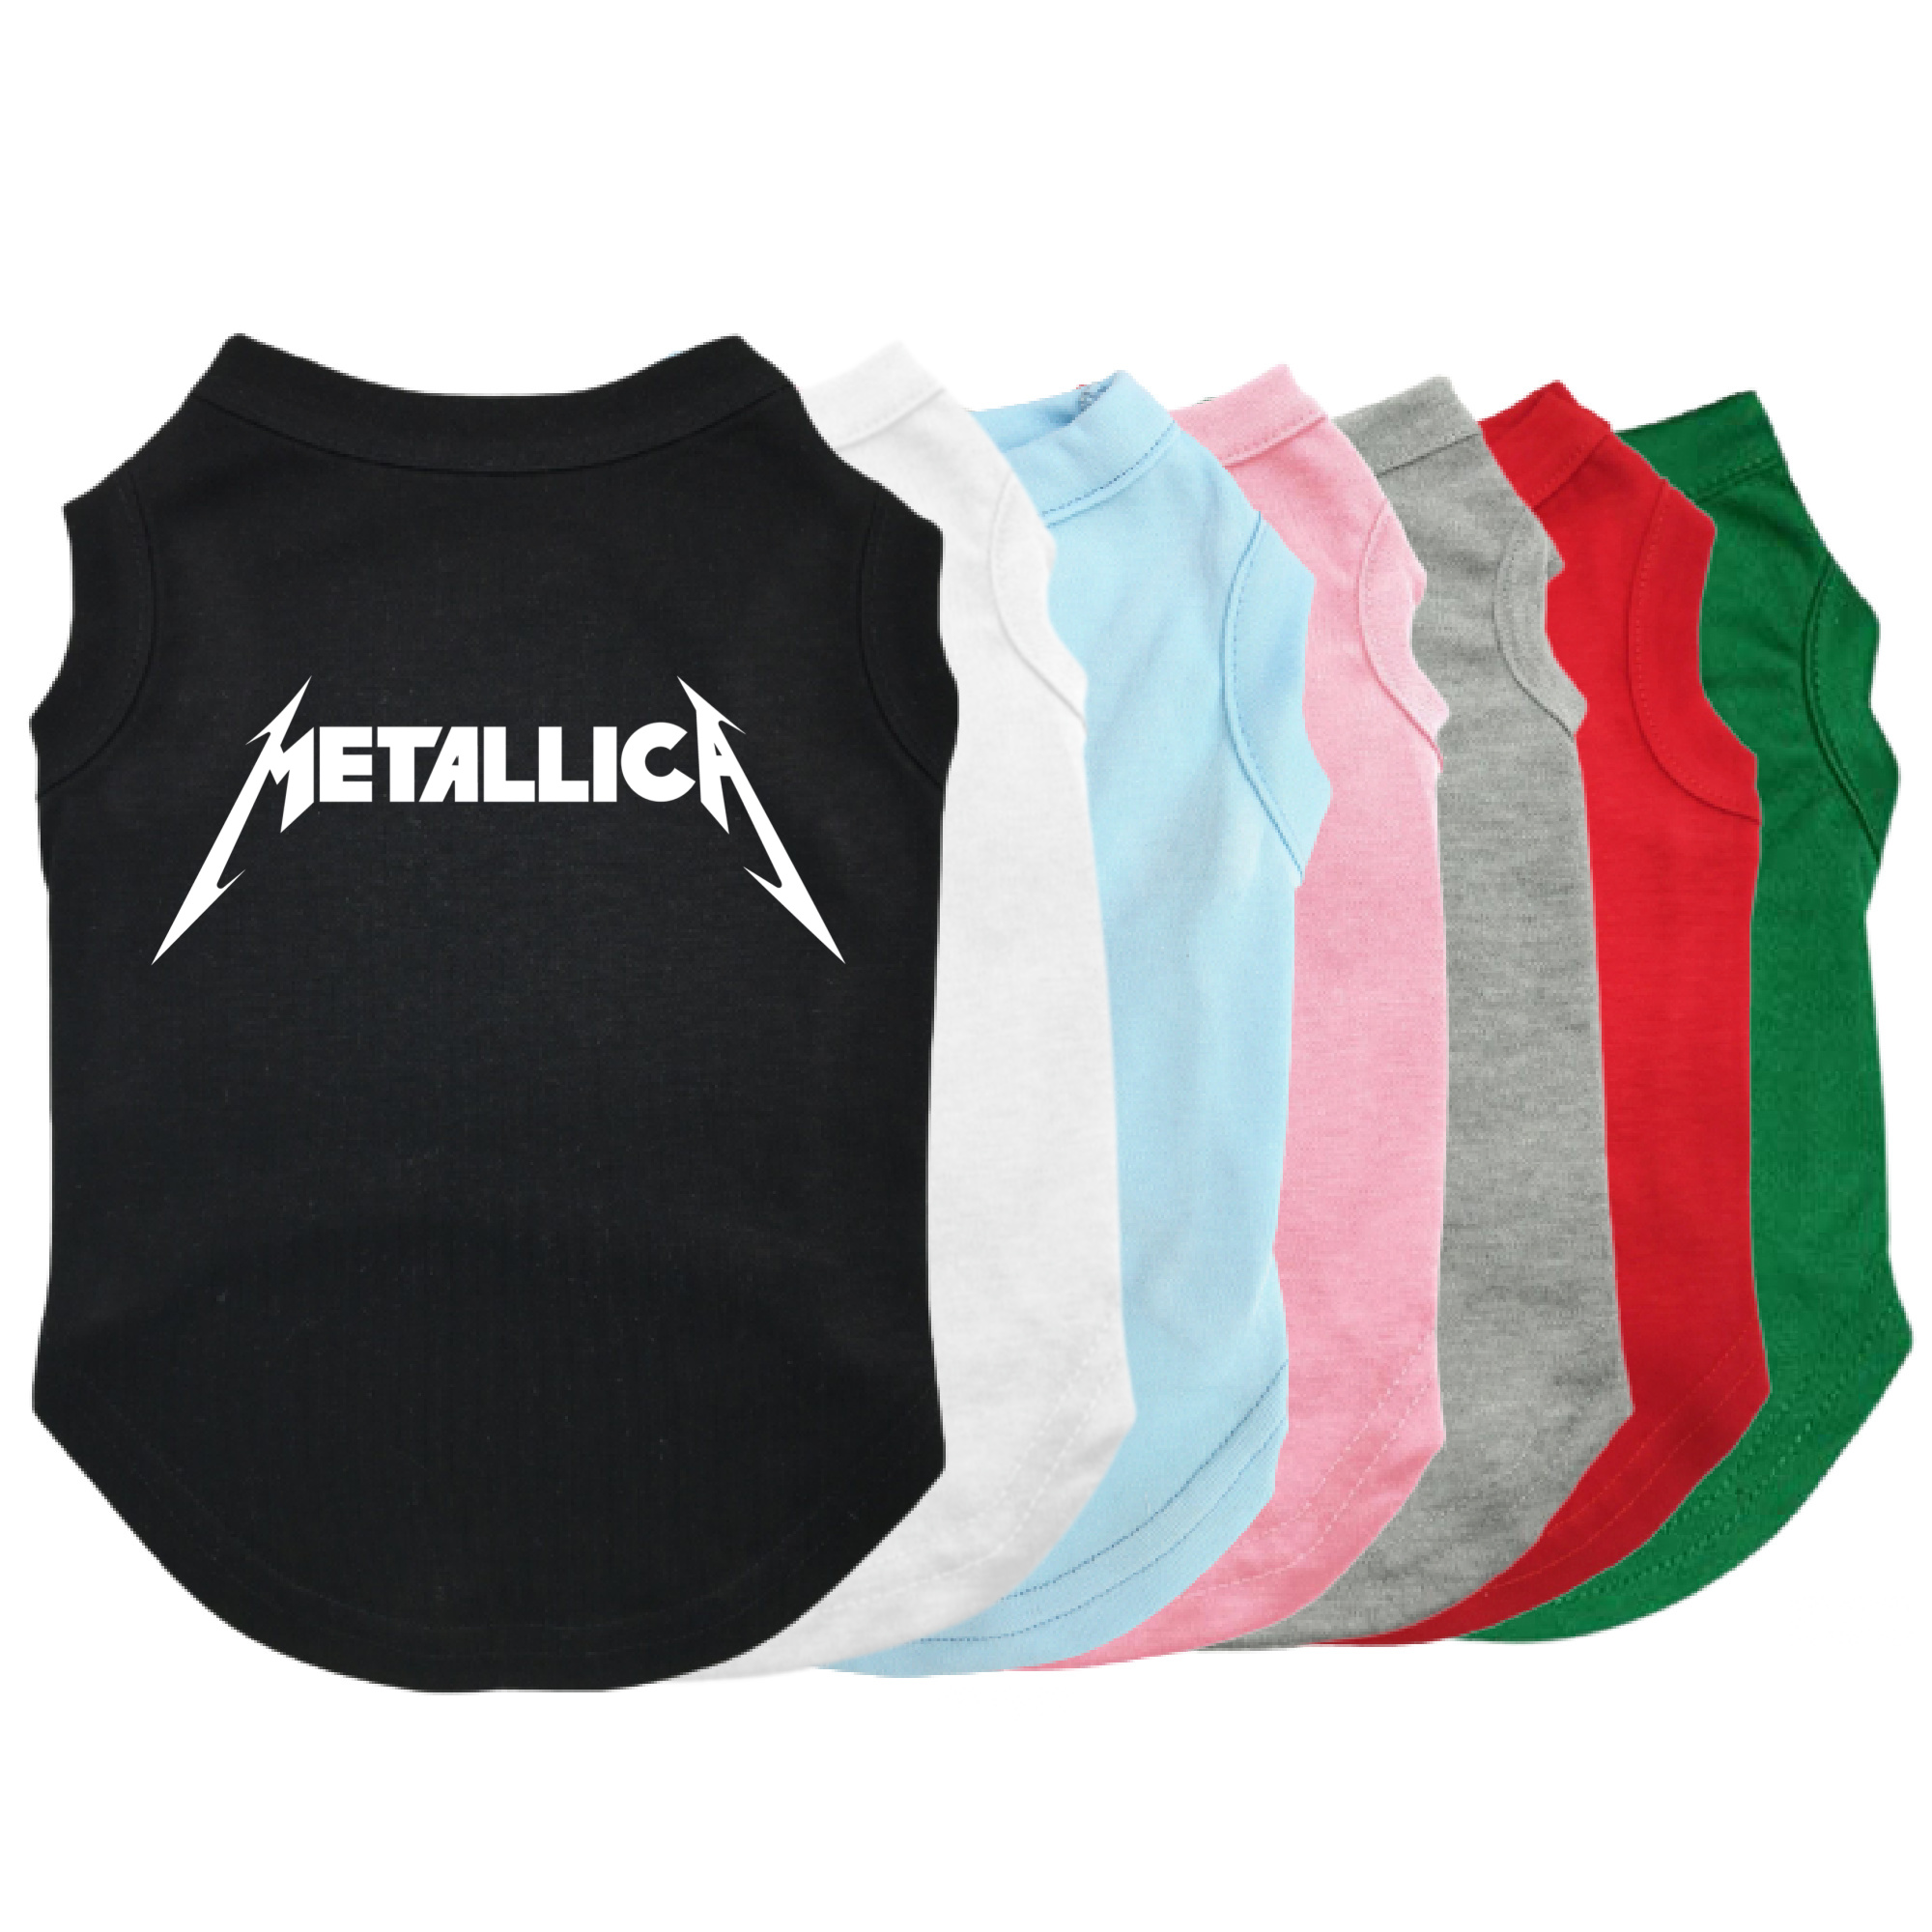 Metallica Dog Shirt exclusive at The Honest Dog